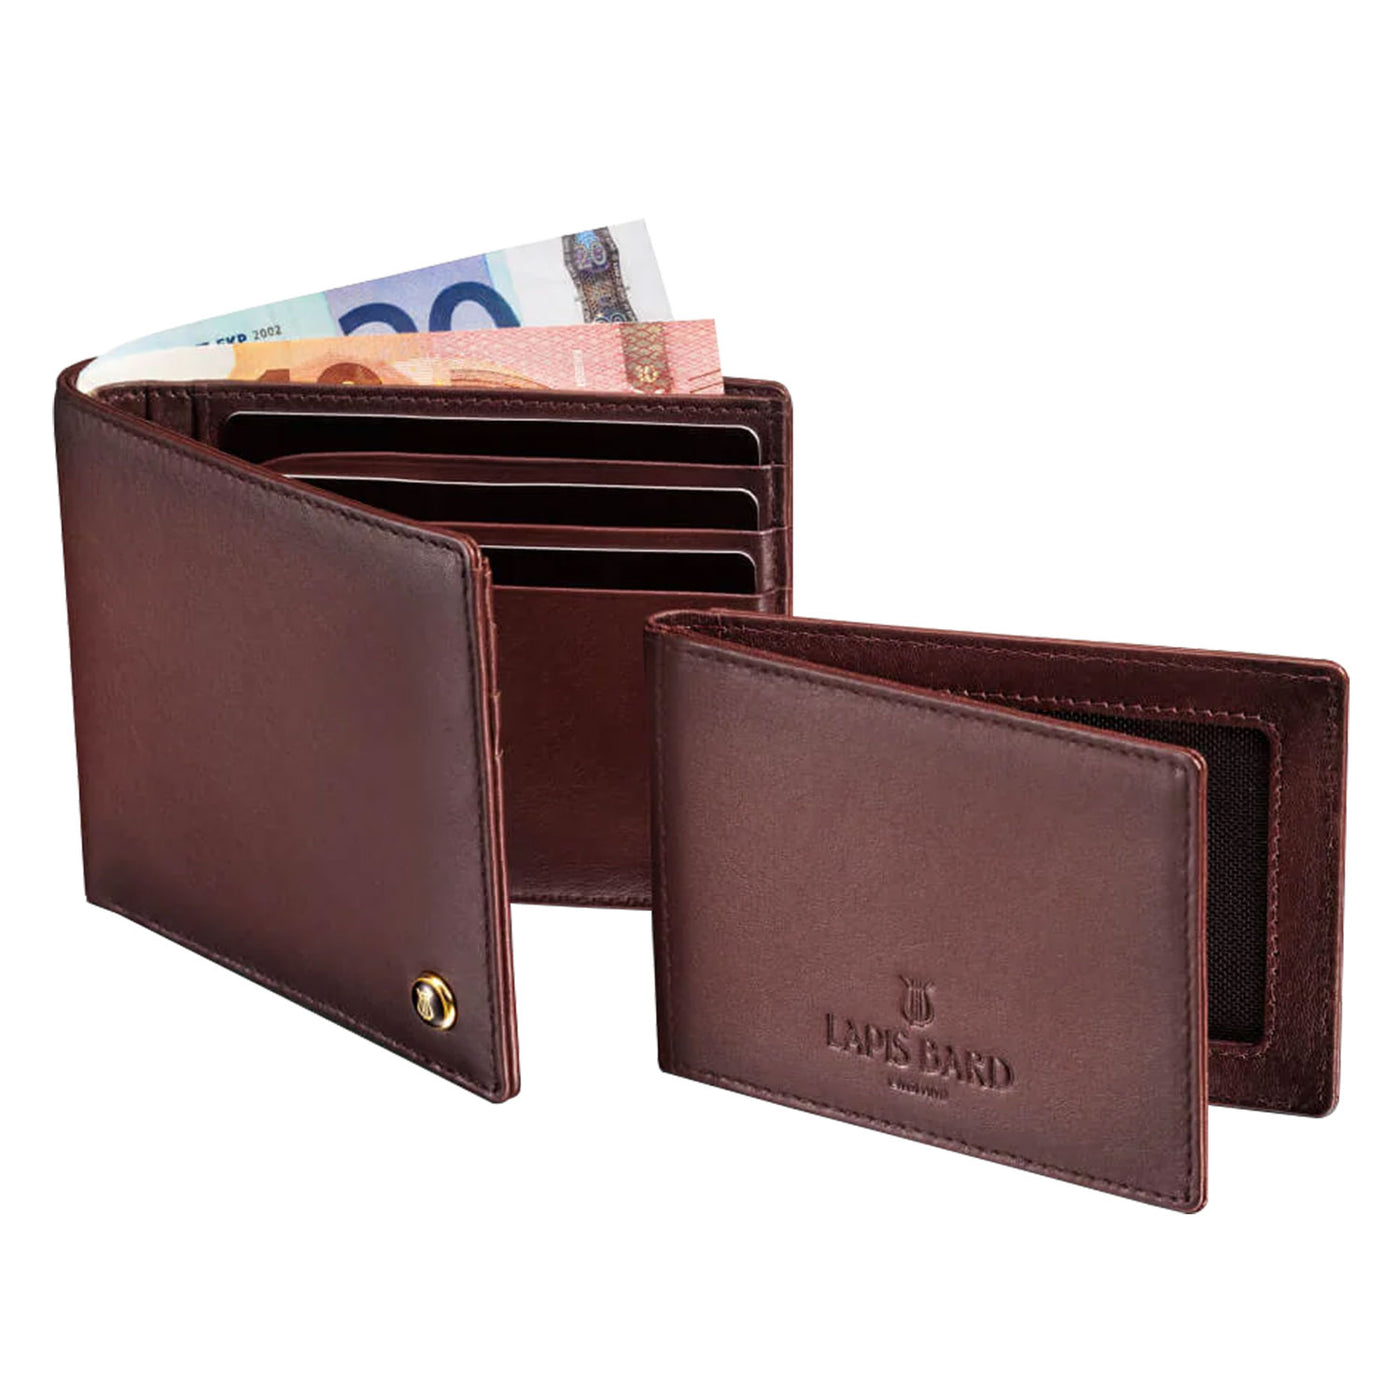 Lapis Bard Ducorium Bifold Evening 6cc Wallet with Additional Sleeve - Bordeaux 4